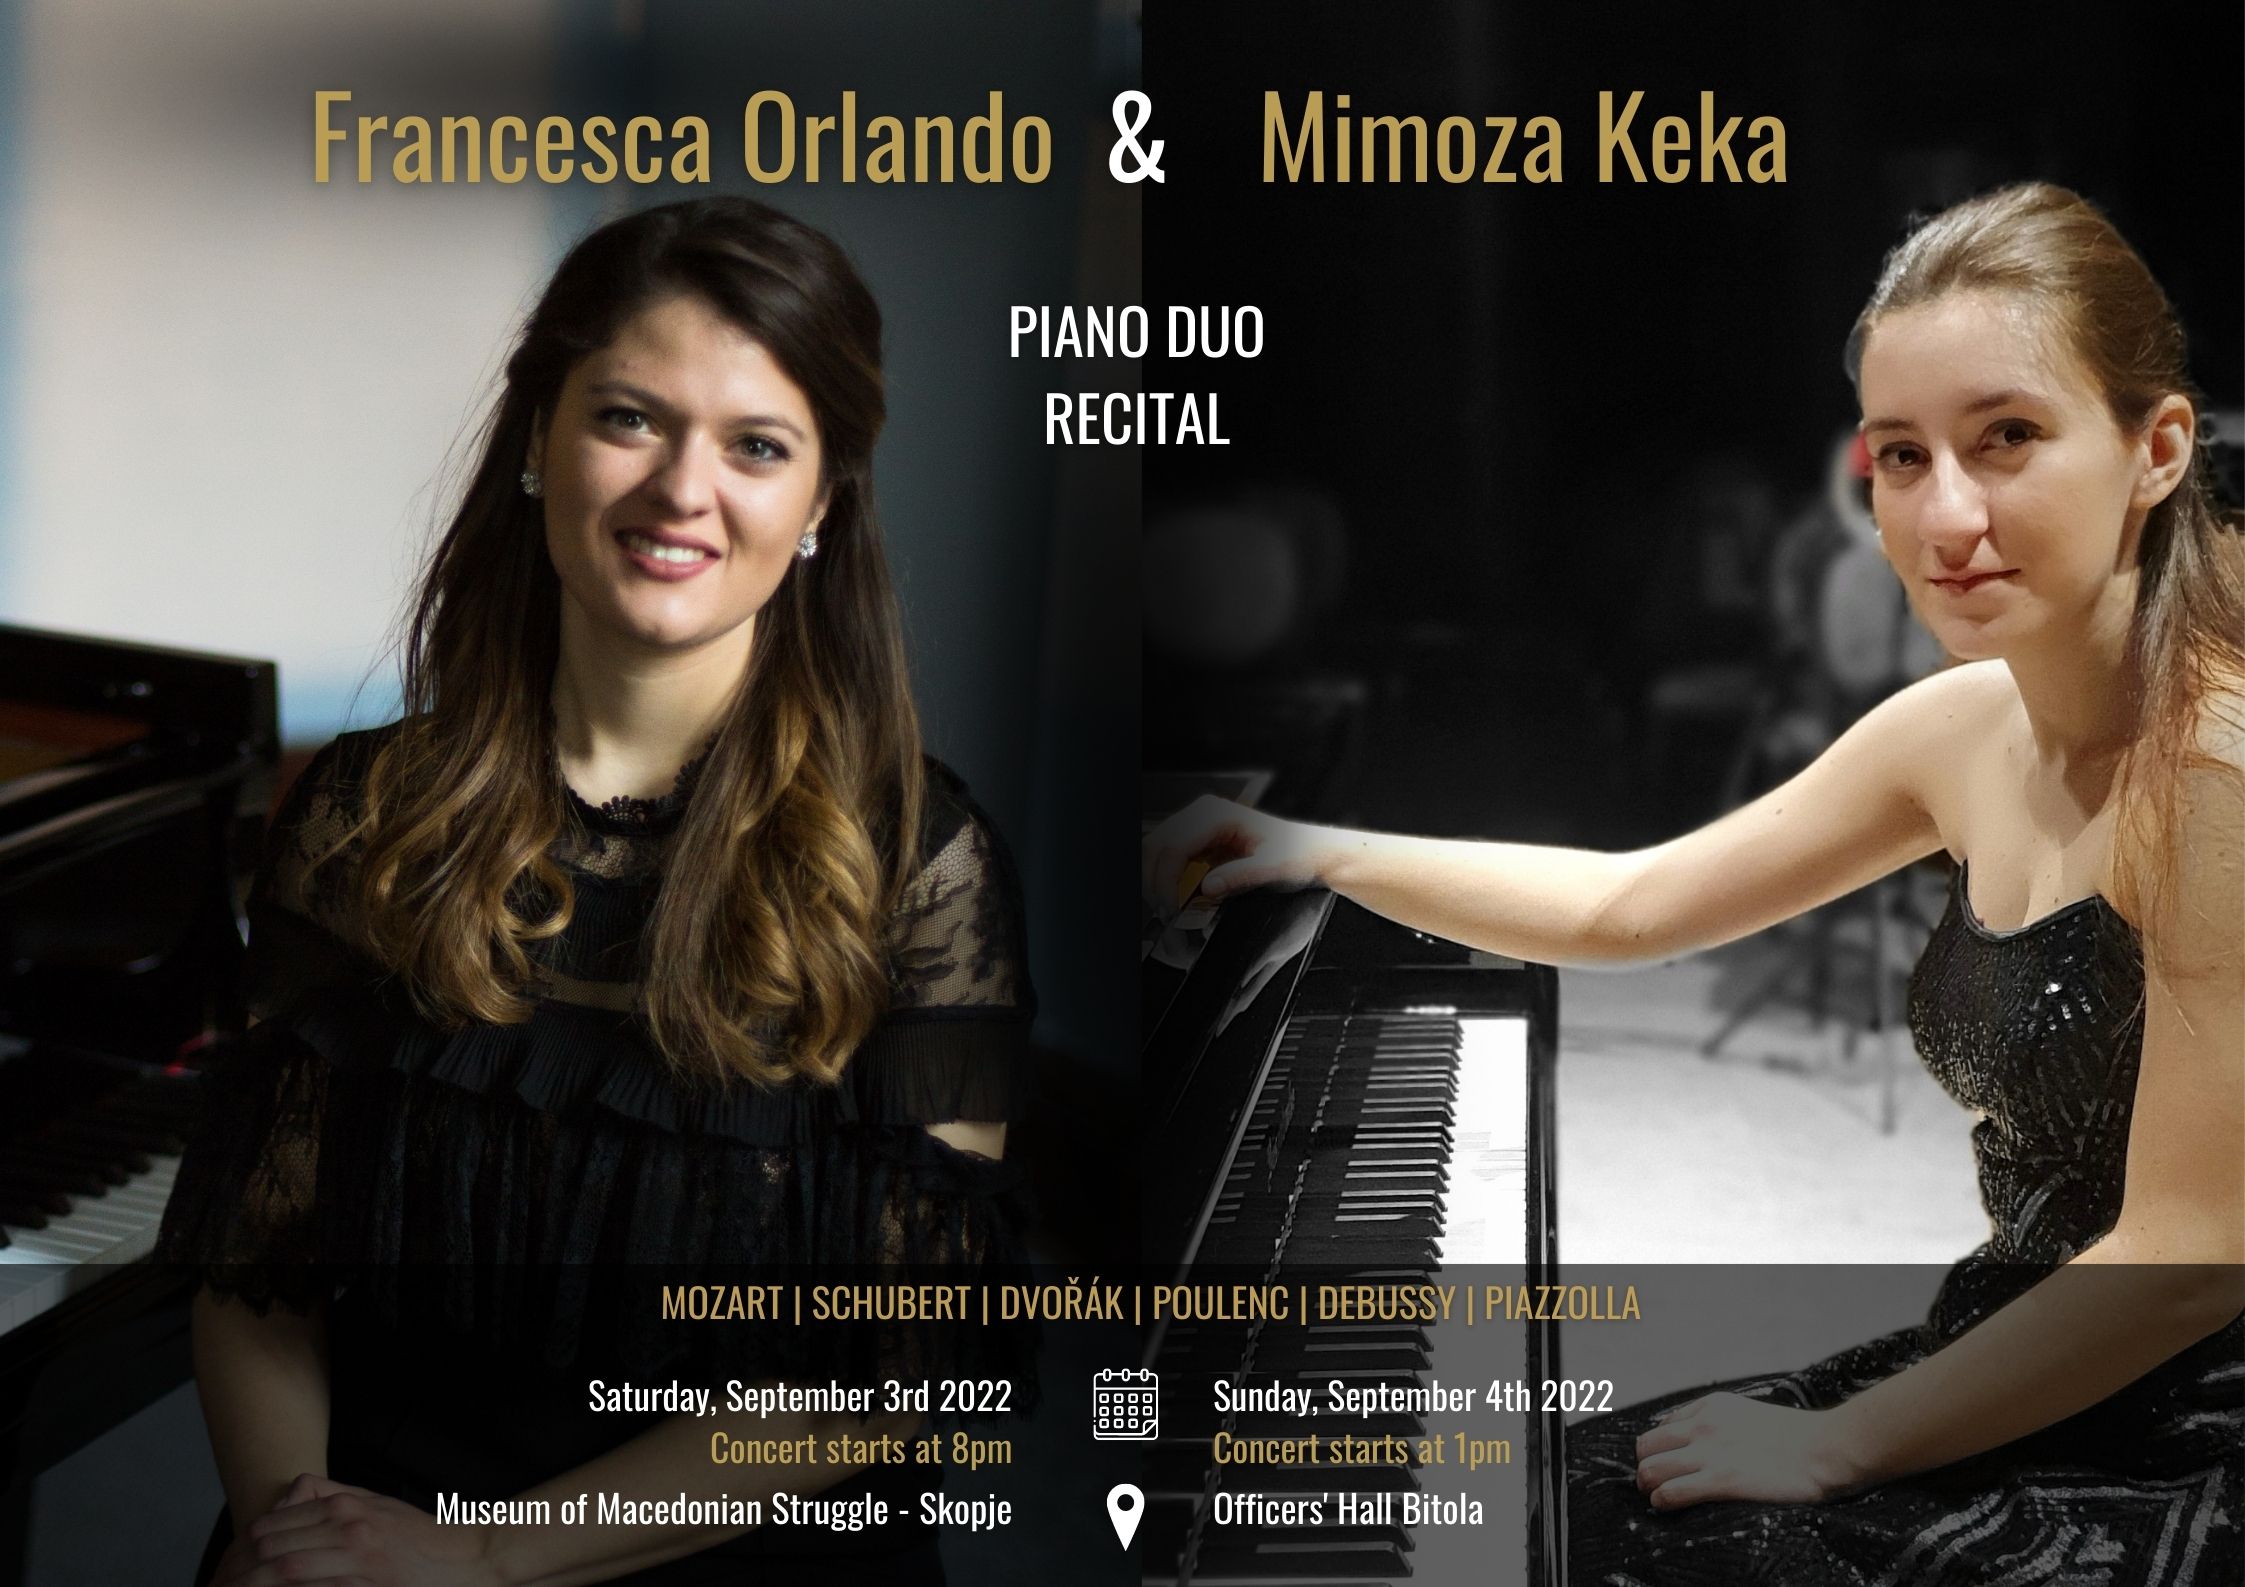 Concert Series by Pianists Mimoza Keka & Francesca Orlando